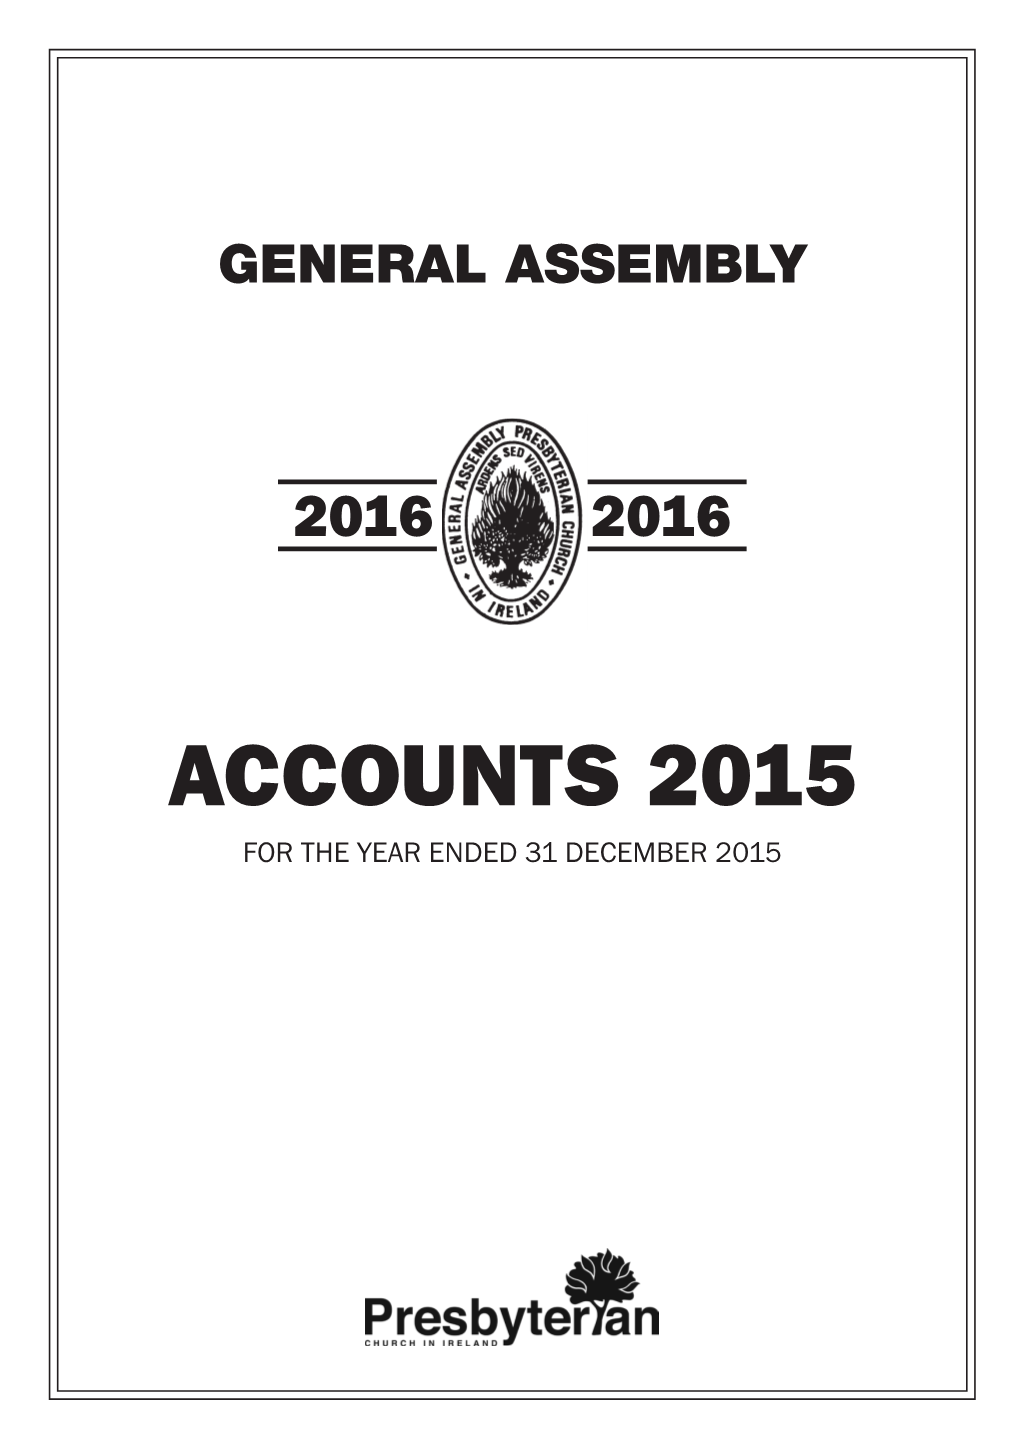 PCI Statement of Accounts 2015